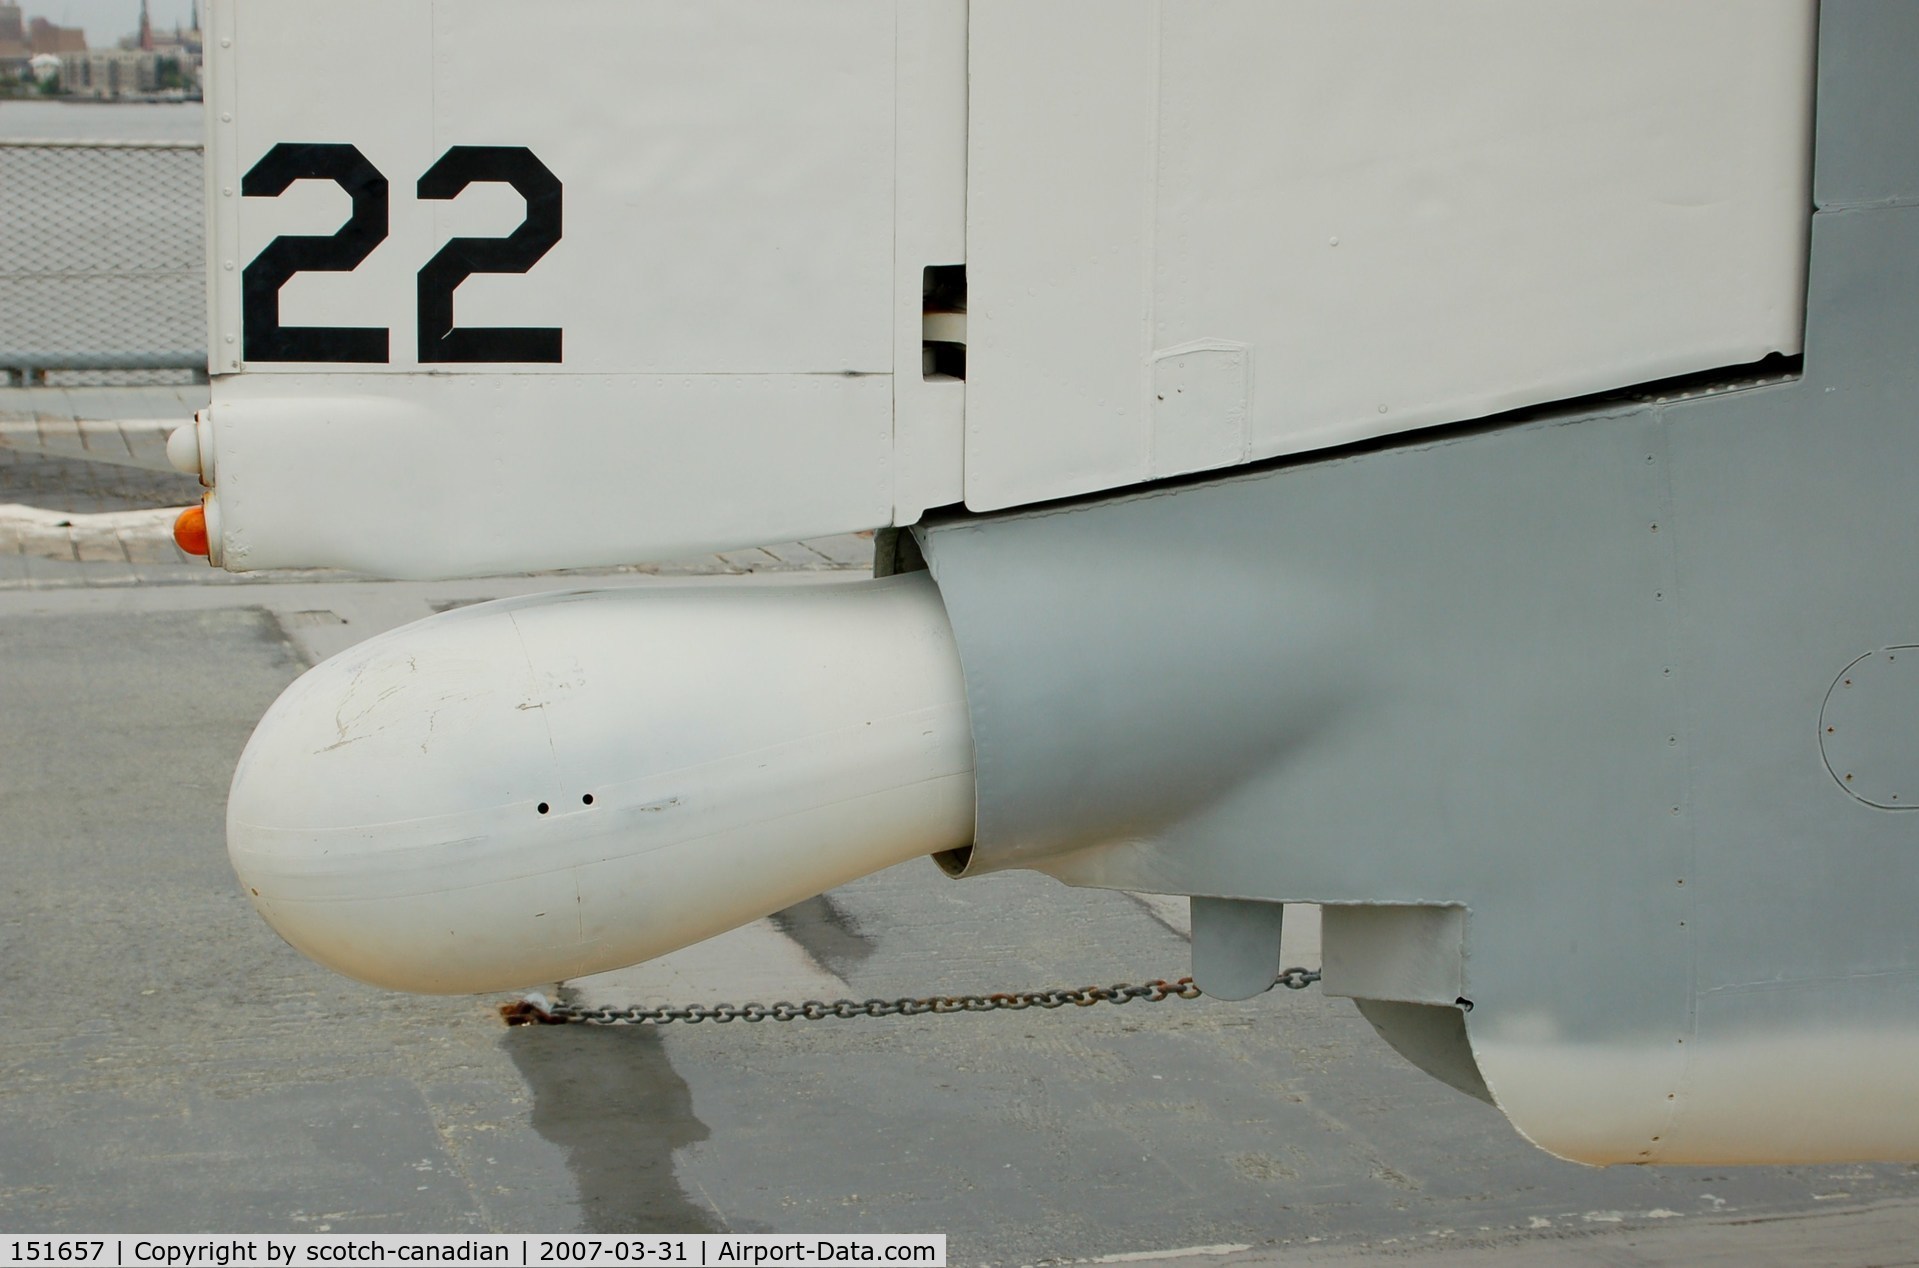 151657, Grumman S-2E Tracker C/N 190C, Grumman S-2E Tracker at Patriots Point Naval & Maritime Museum, Mount Pleasant, SC